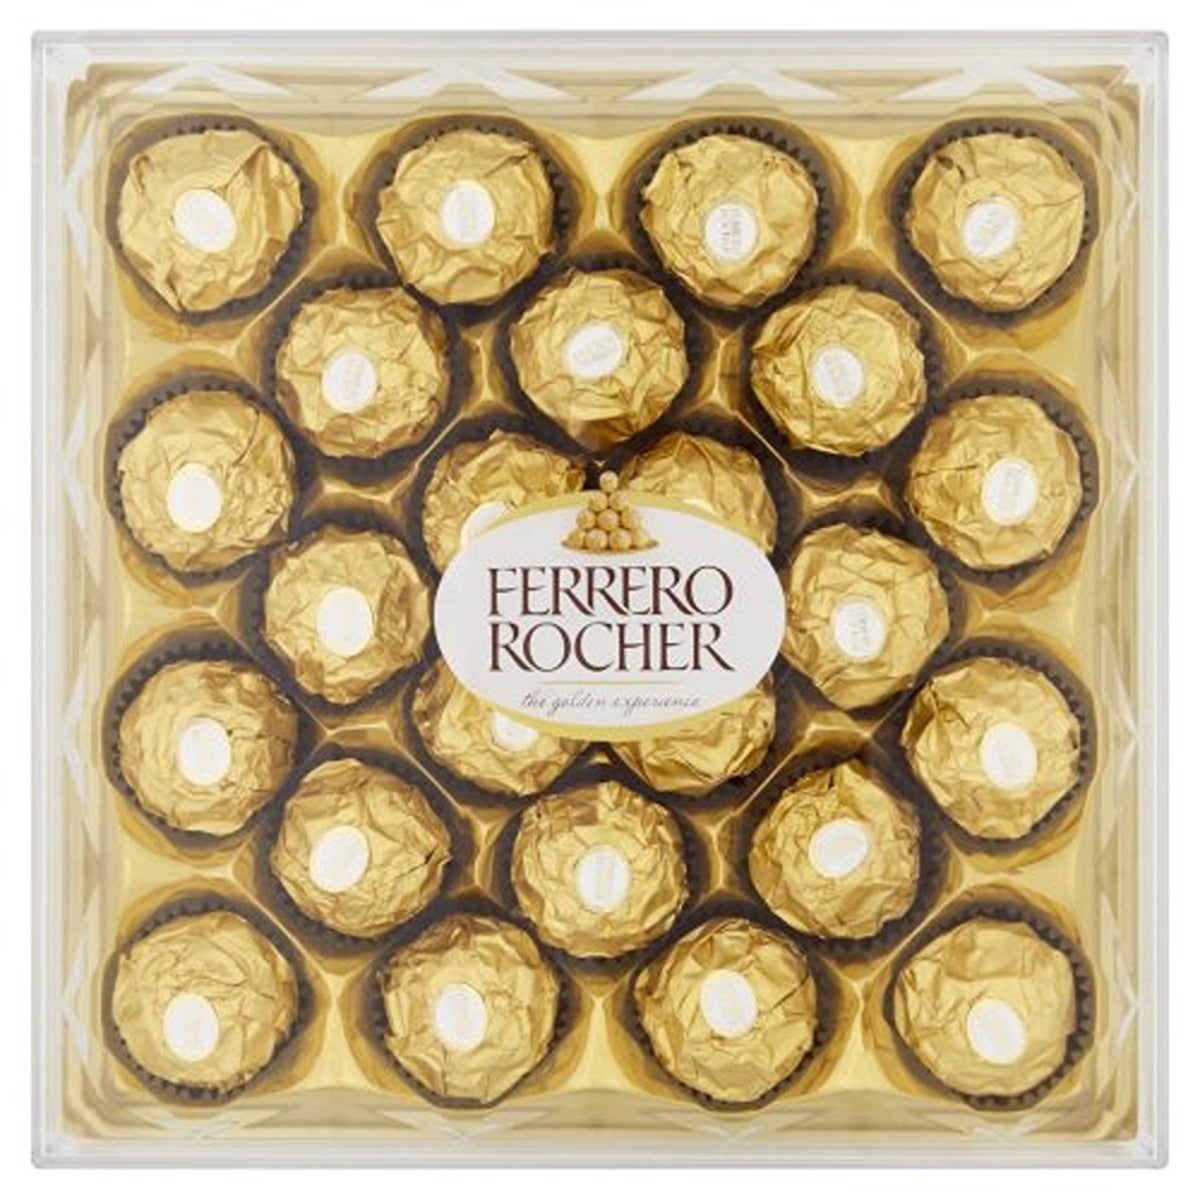 Ferrero Rocher - Original Hazelnut Chocolate Box - 90g - Continental Food Store